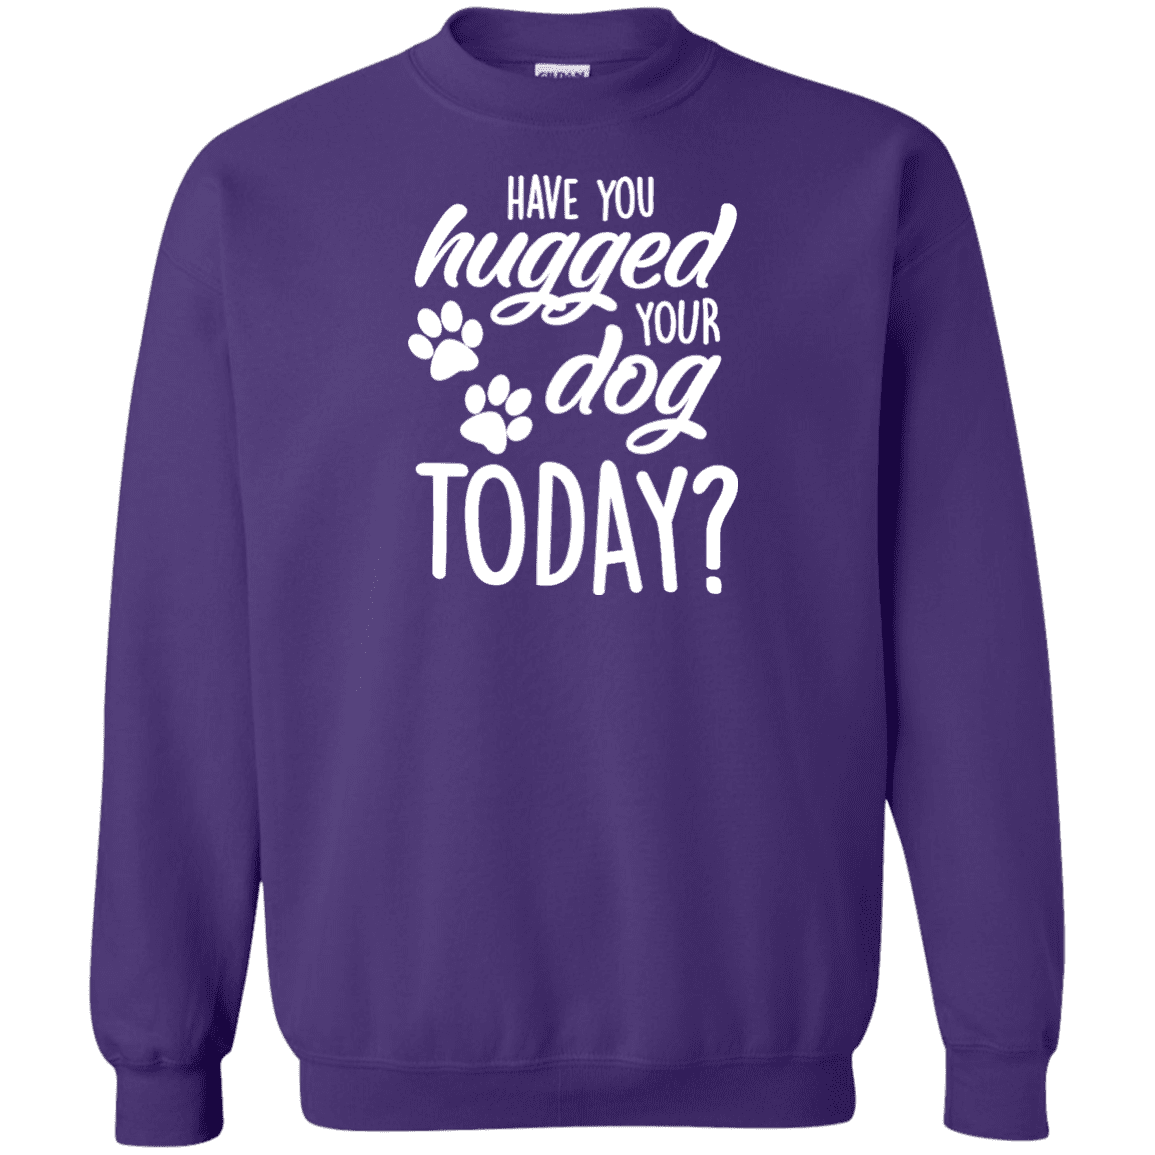 Have You Hugged Your Dog Today? - Sweatshirt.